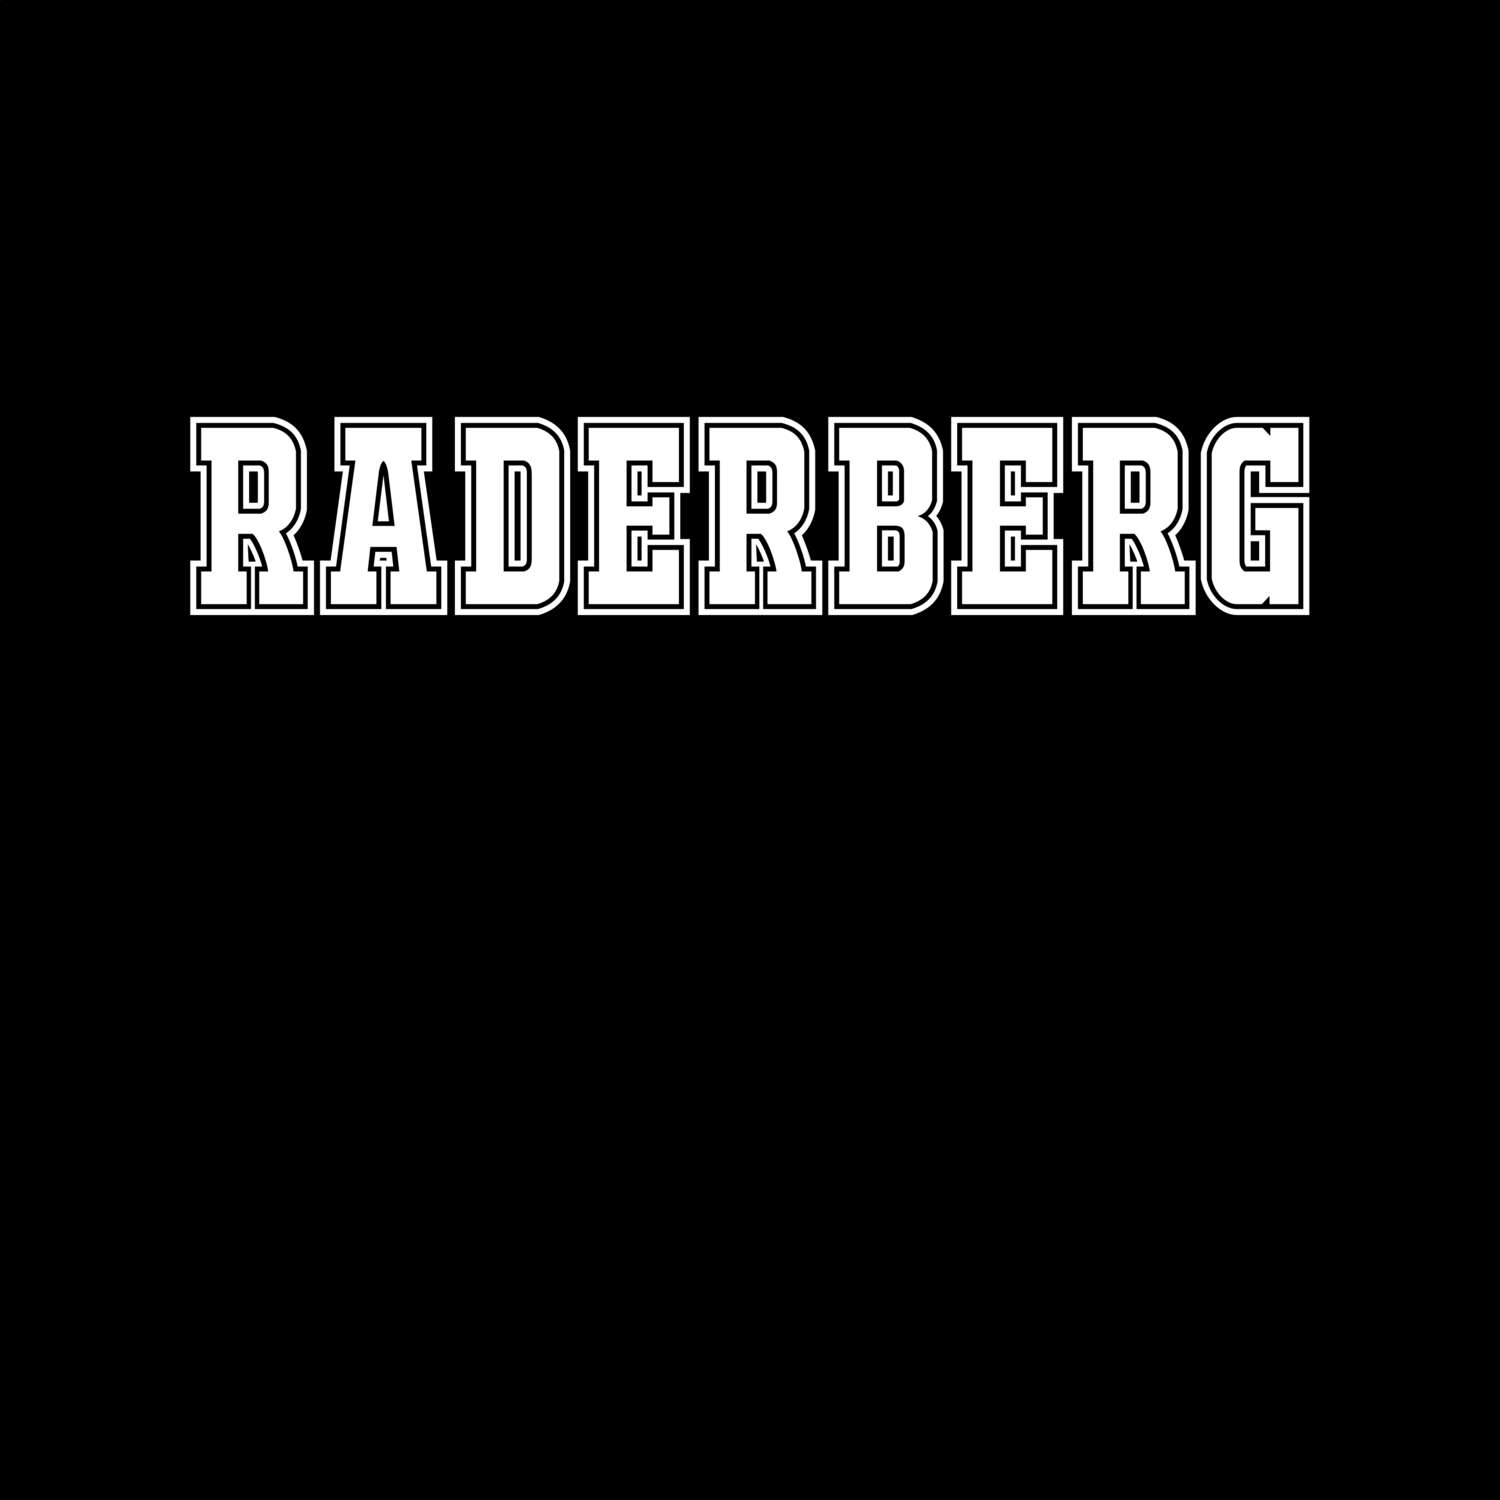 Raderberg T-Shirt »Classic«